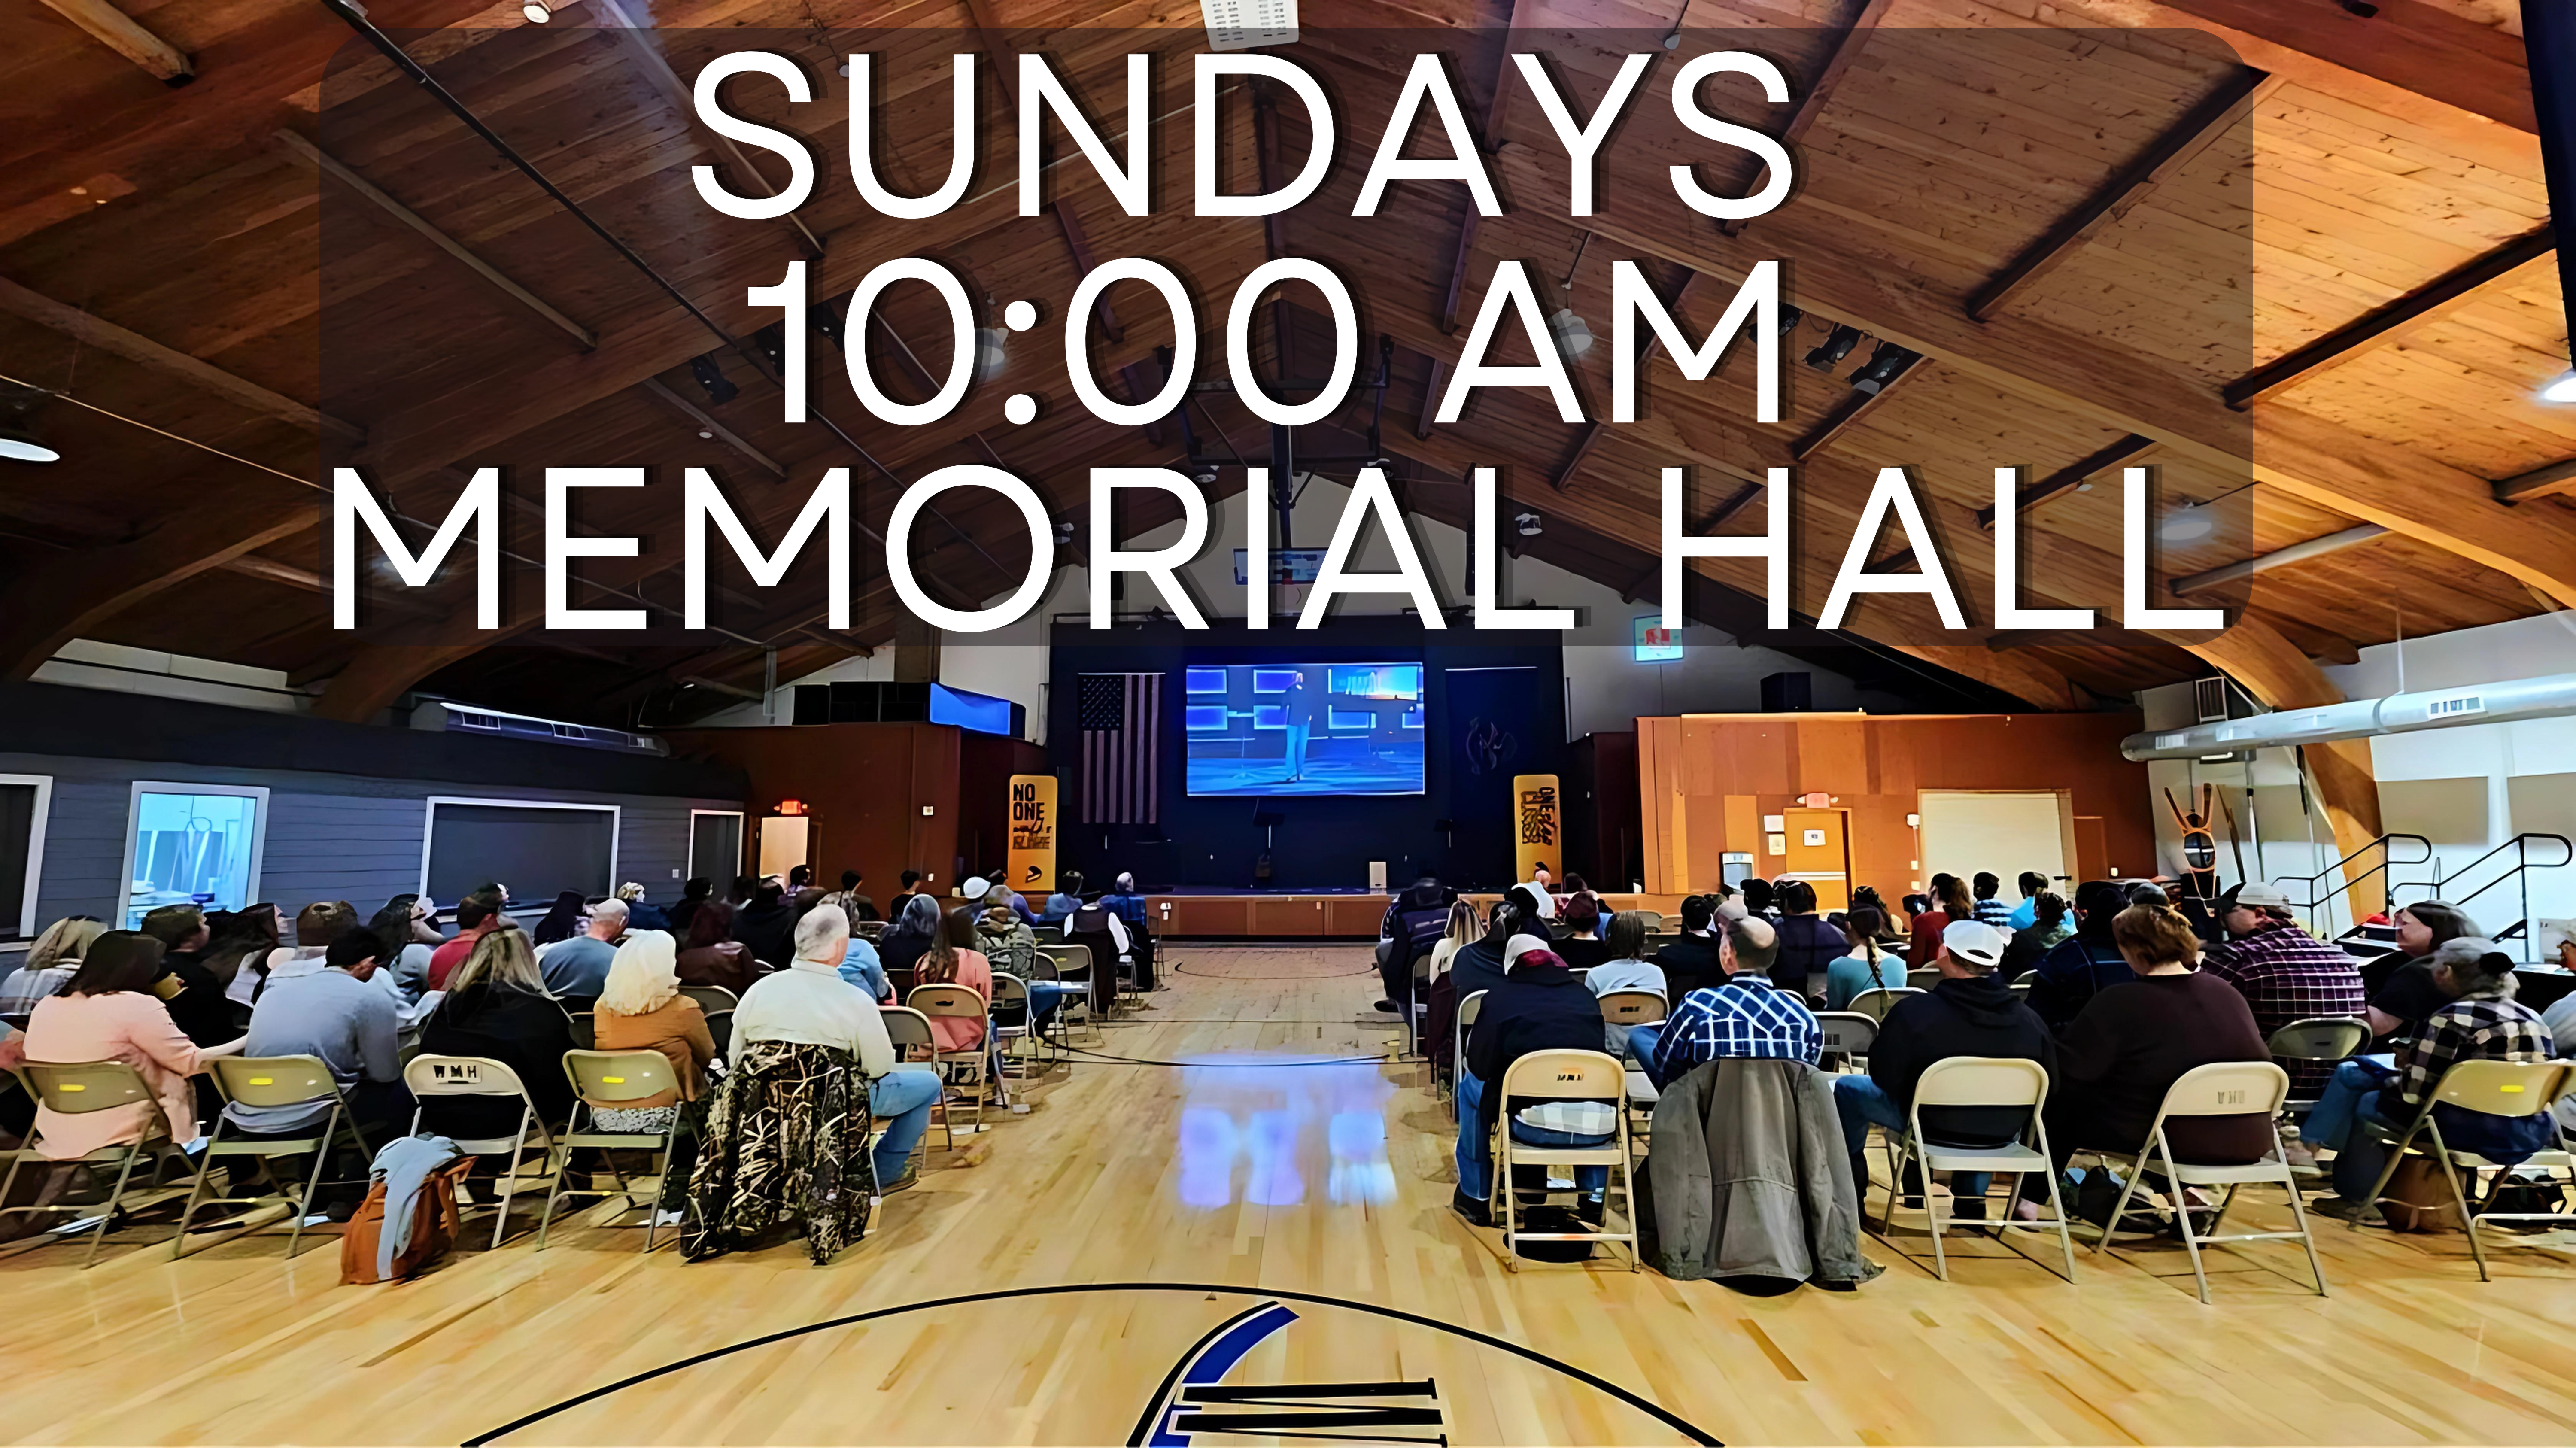 Sundays at 1000am Memorial Hall